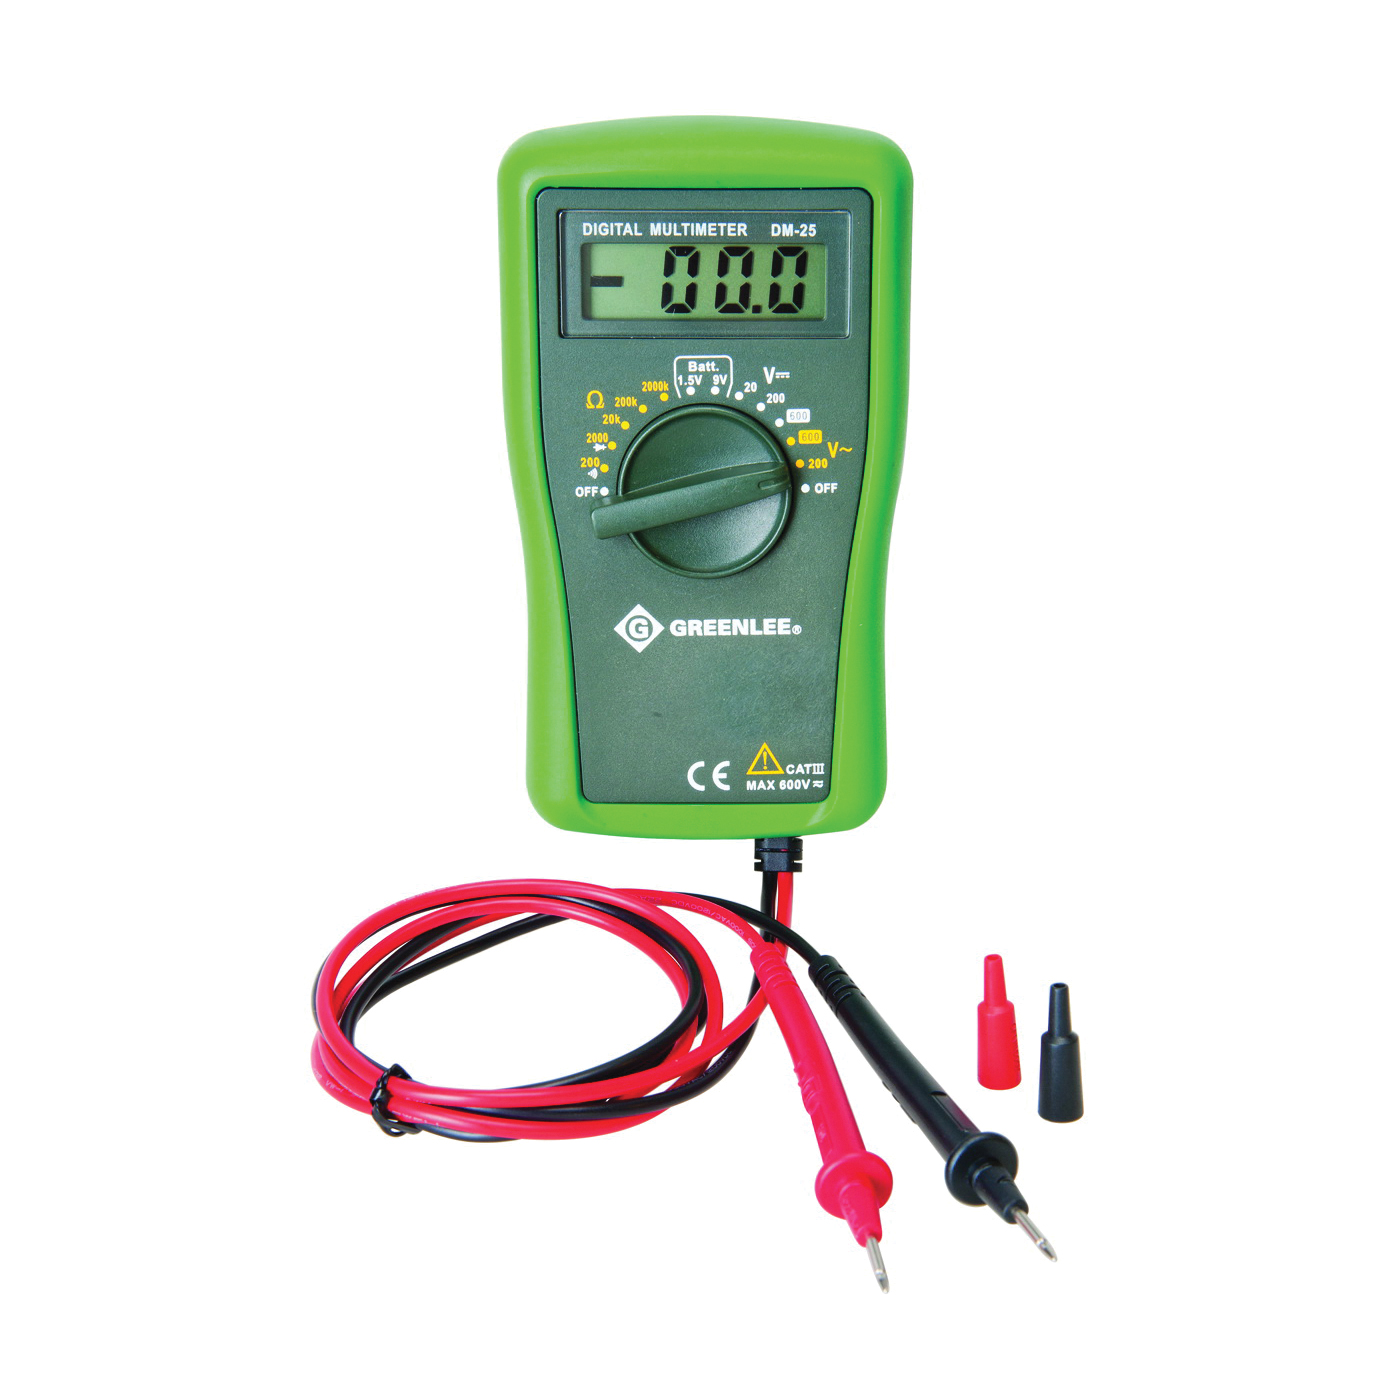 DM-25 Multimeter, Digital Display, Functions: AC Voltage, DC Voltage, Resistance